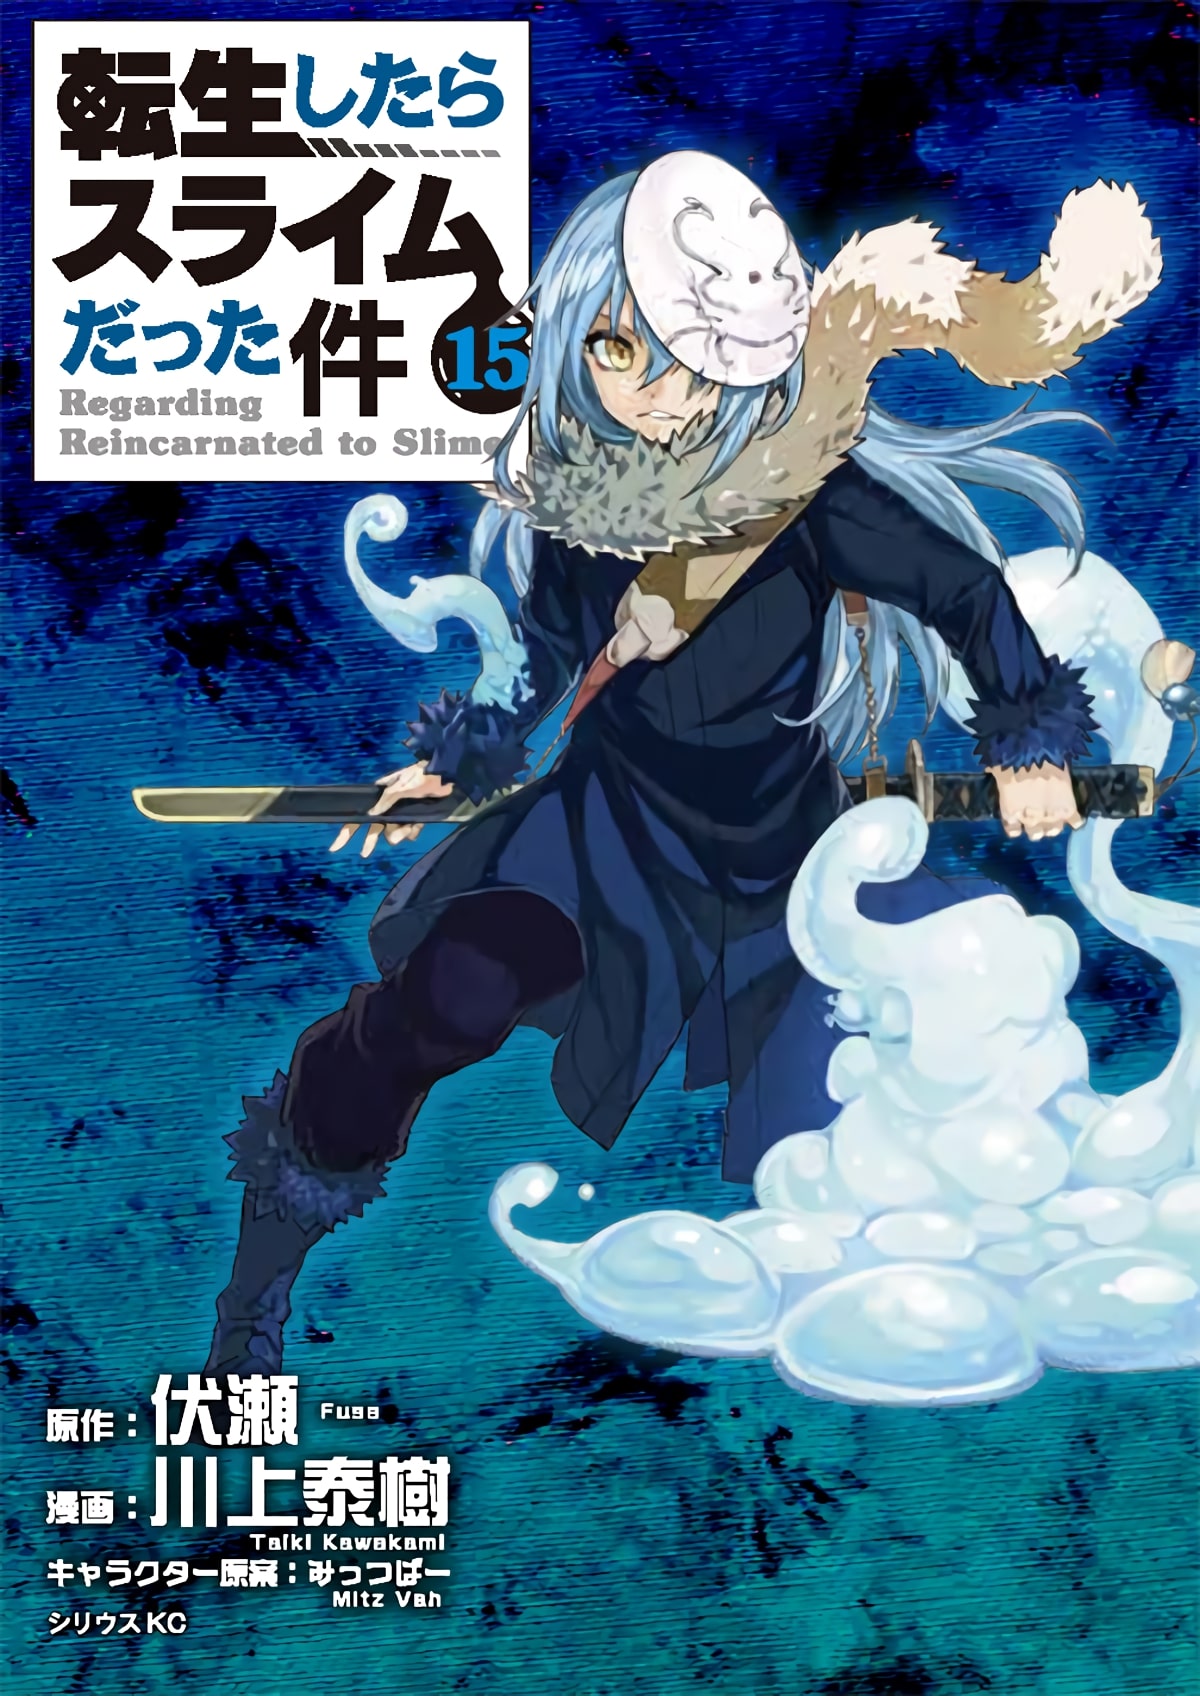 Light Novel Volume 18, Tensei Shitara Slime datta ken Wiki, Fandom